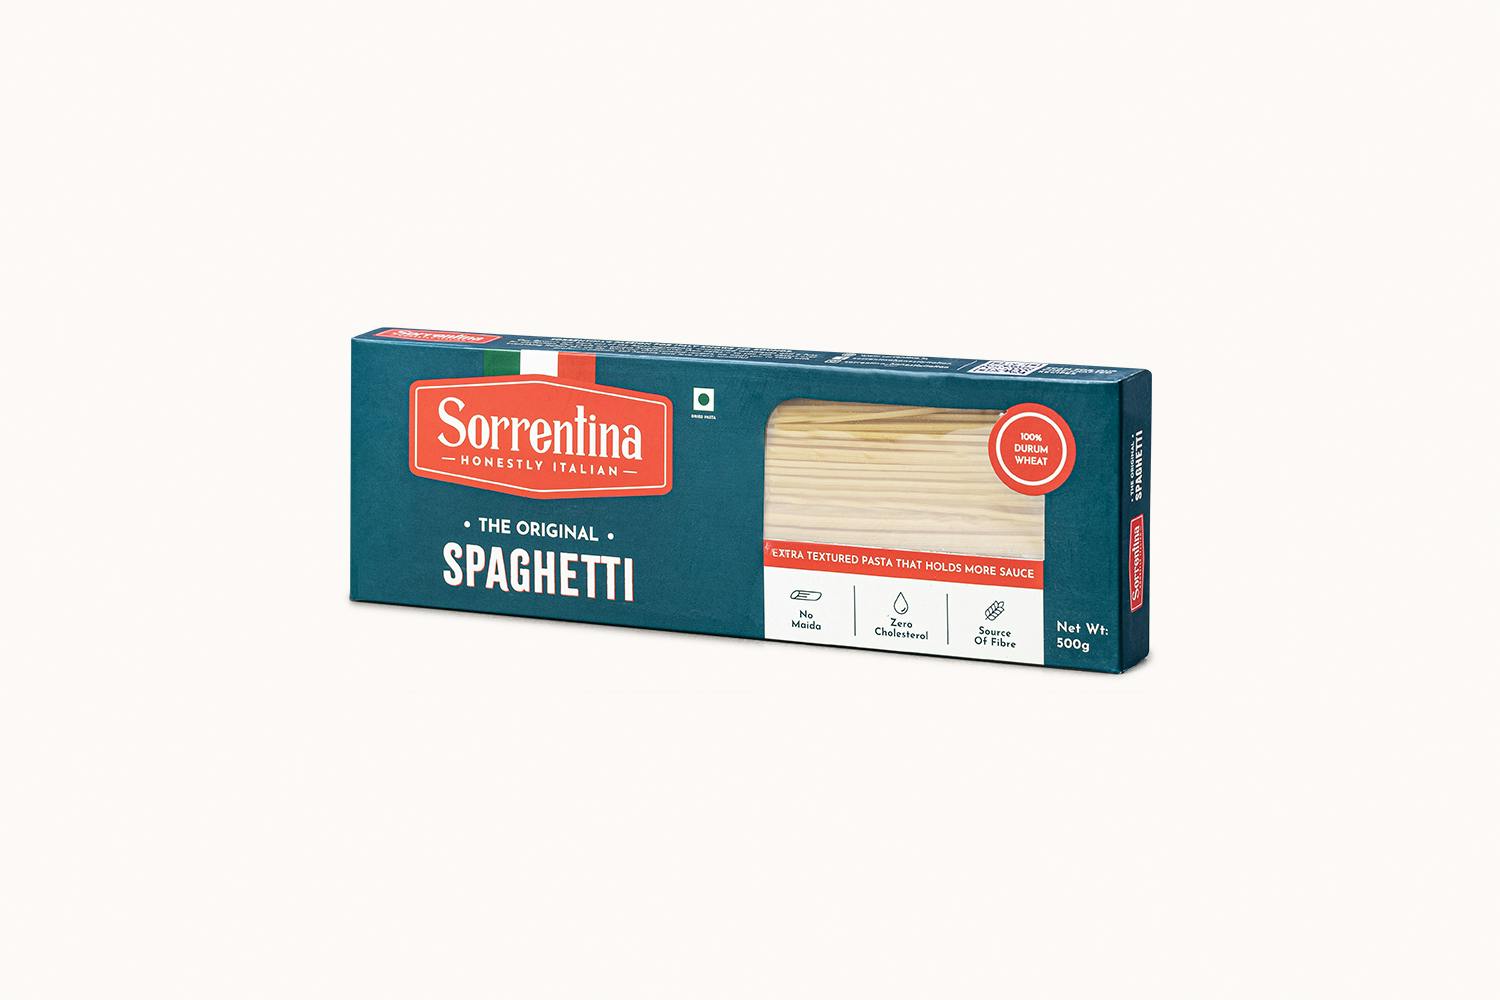 Sorrentina Spaghetti Pasta